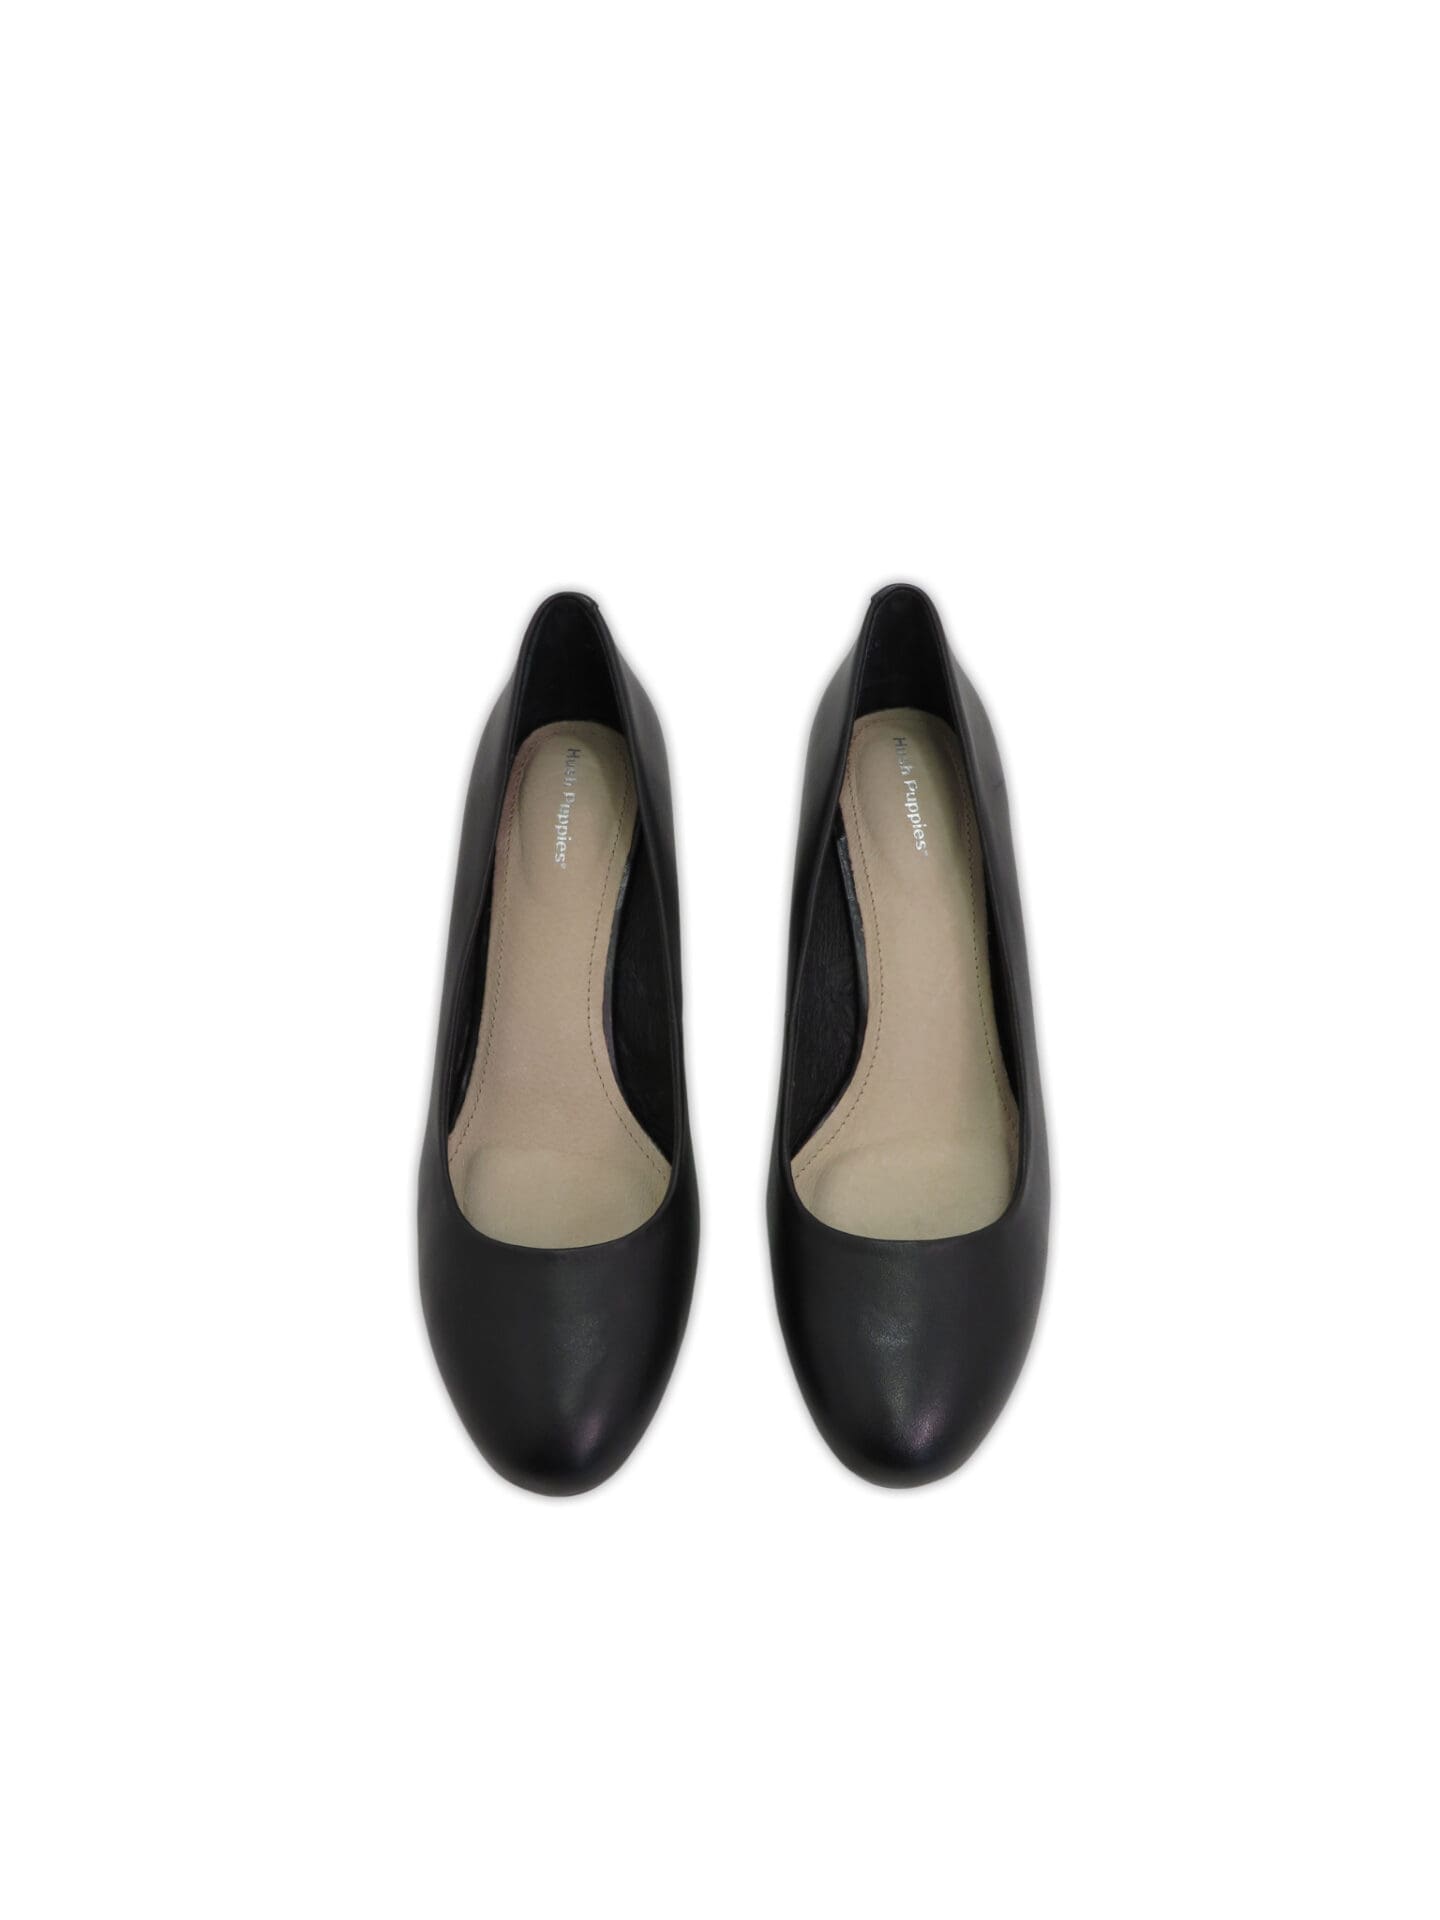 Black leather low heels closed toe